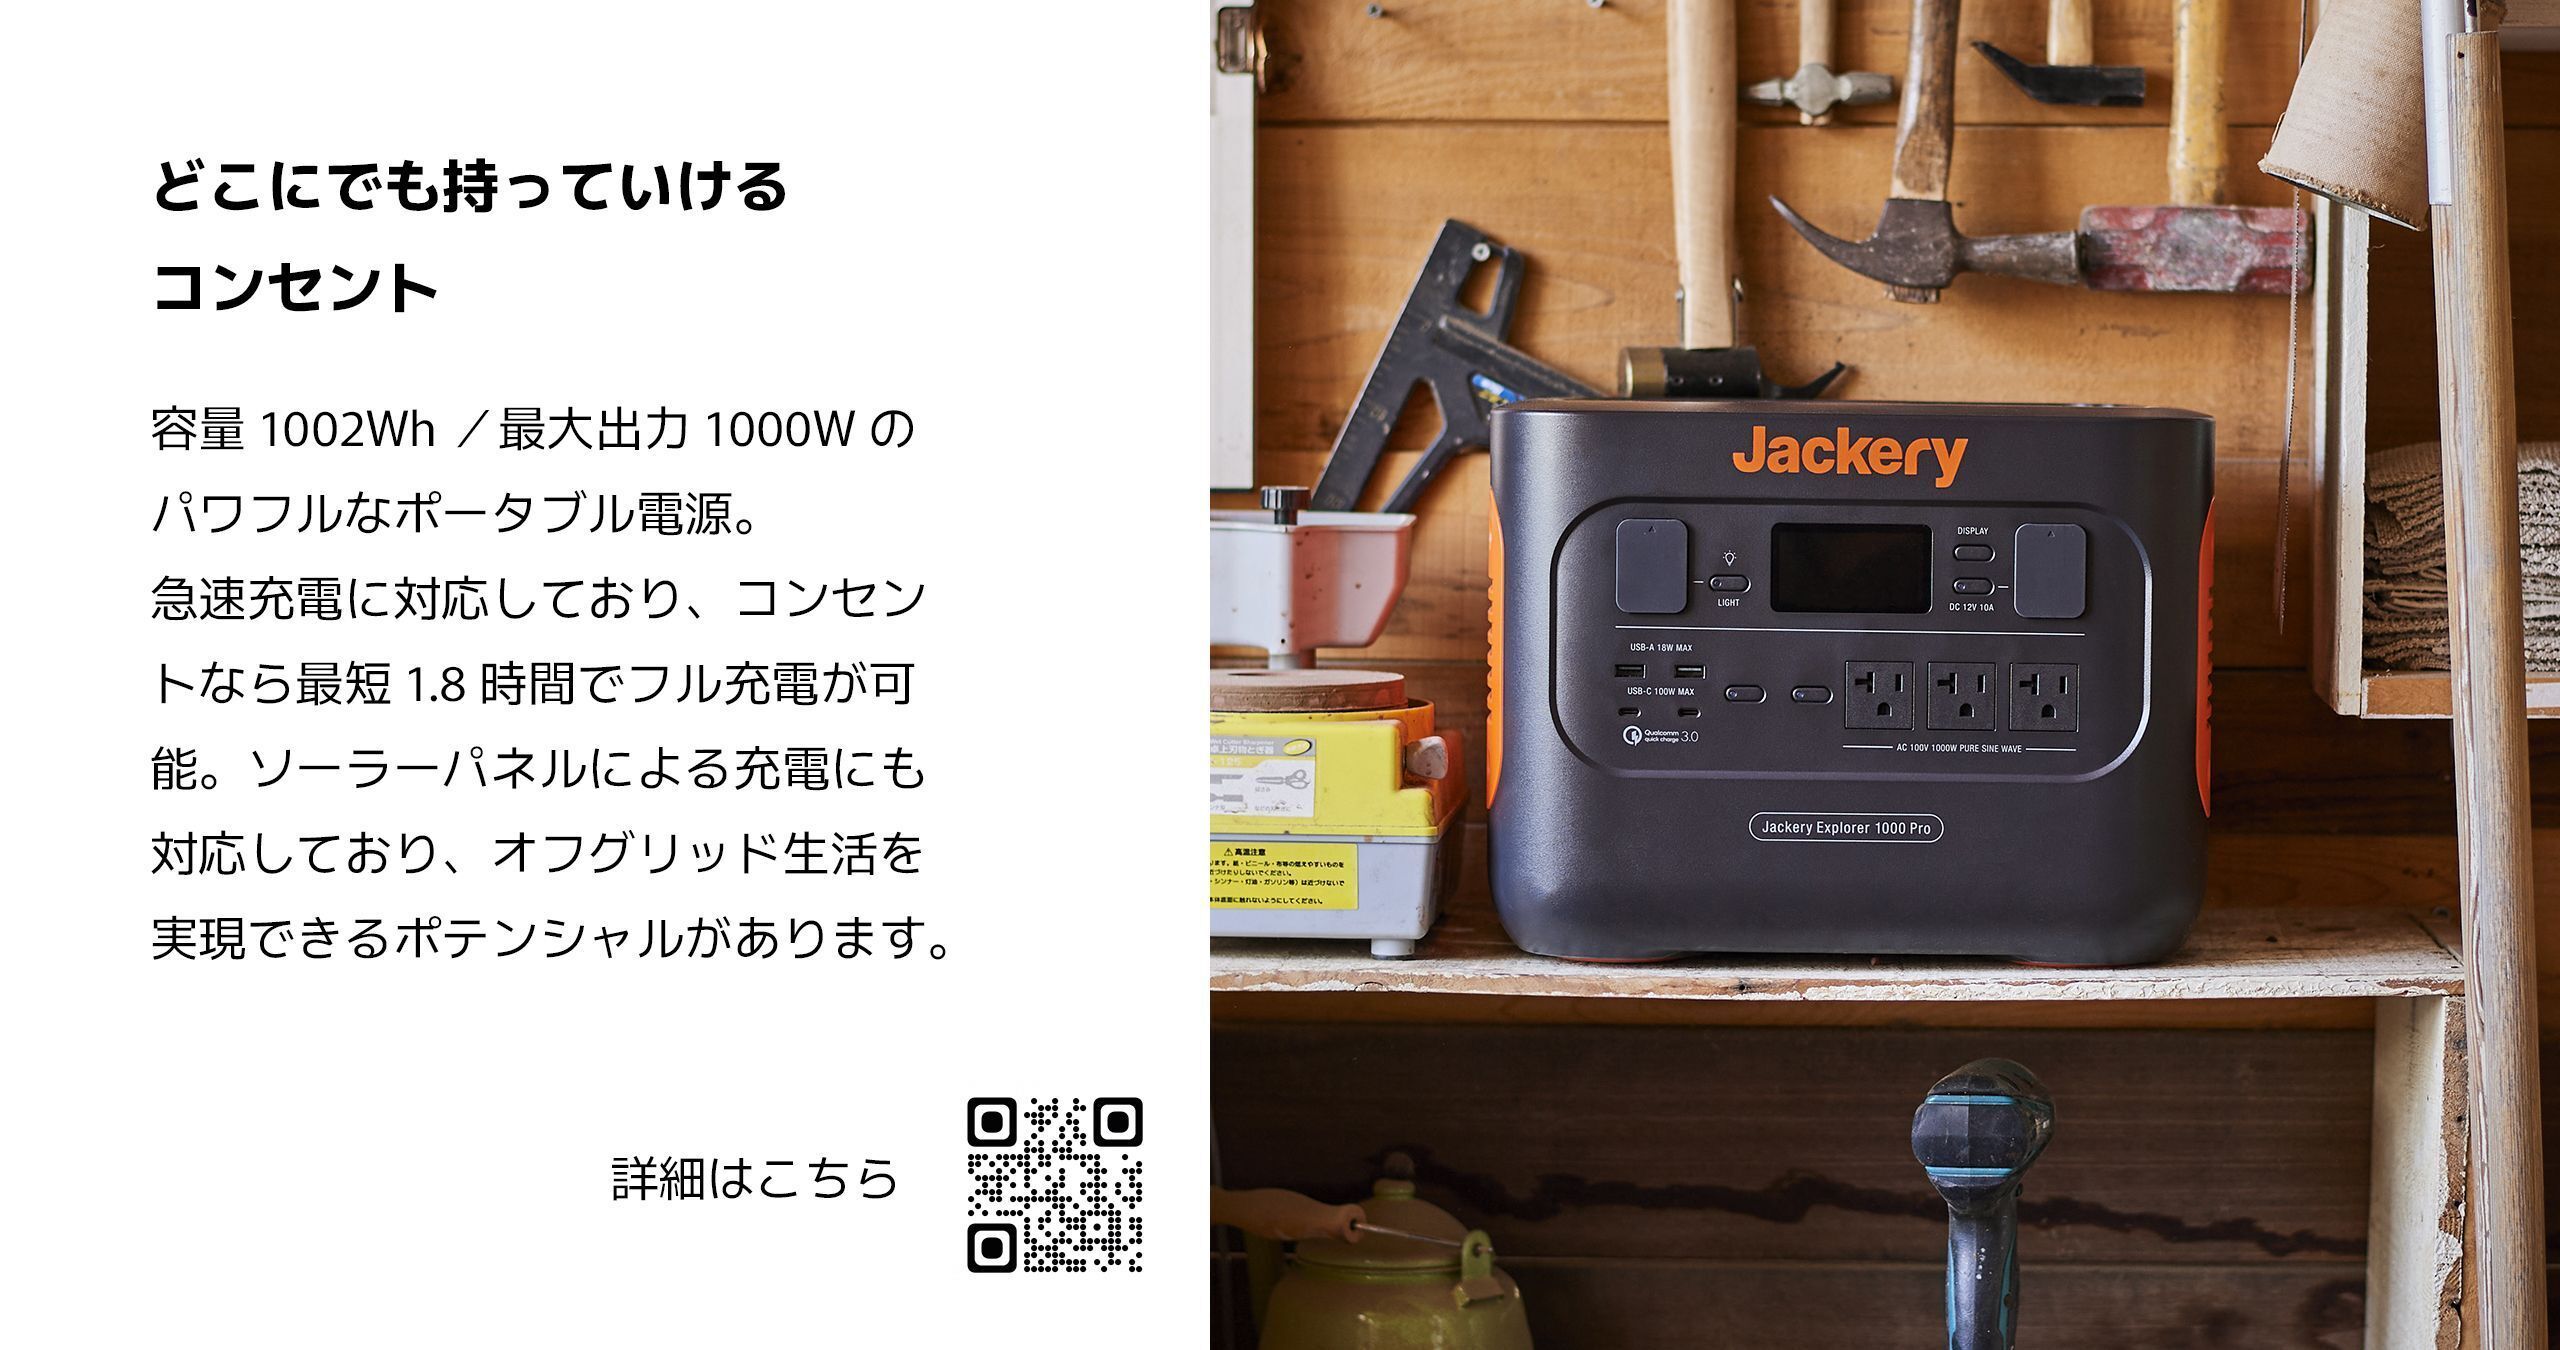 新入荷 Jackery ポータブル電源 Jackery 1000 Pro 1002Wh - htii.edu.kz